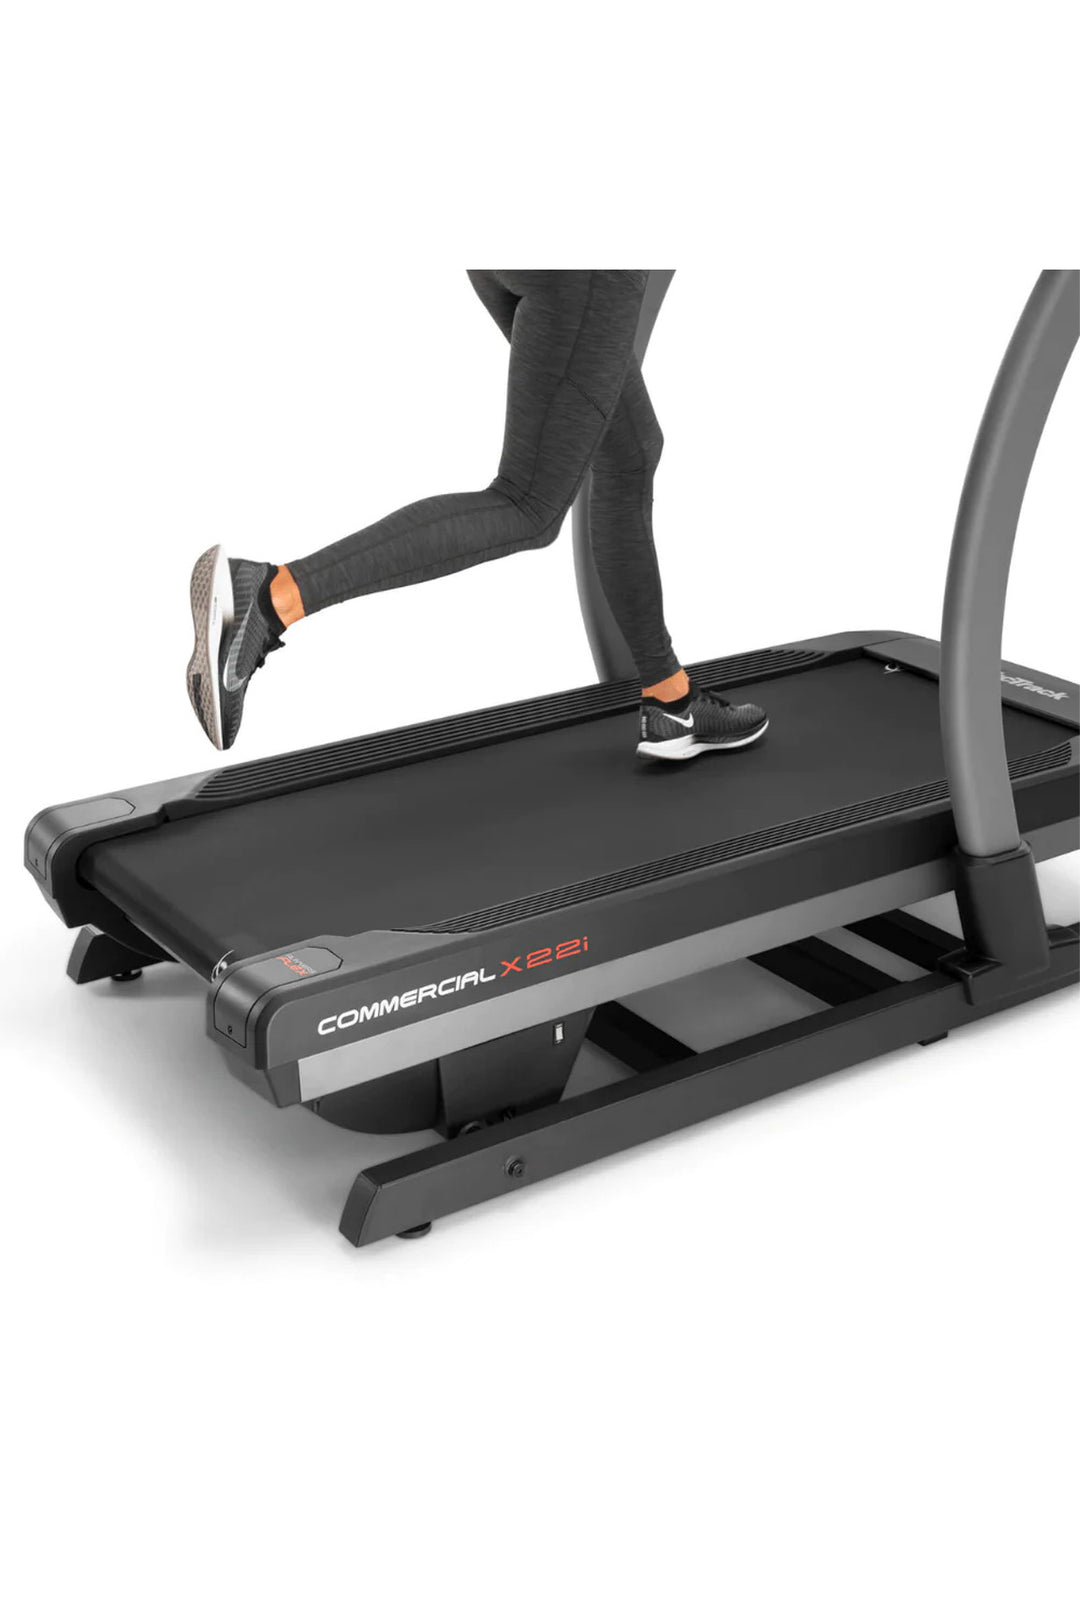 NordicTrack X22i Incline Trainer Treadmill Commercial